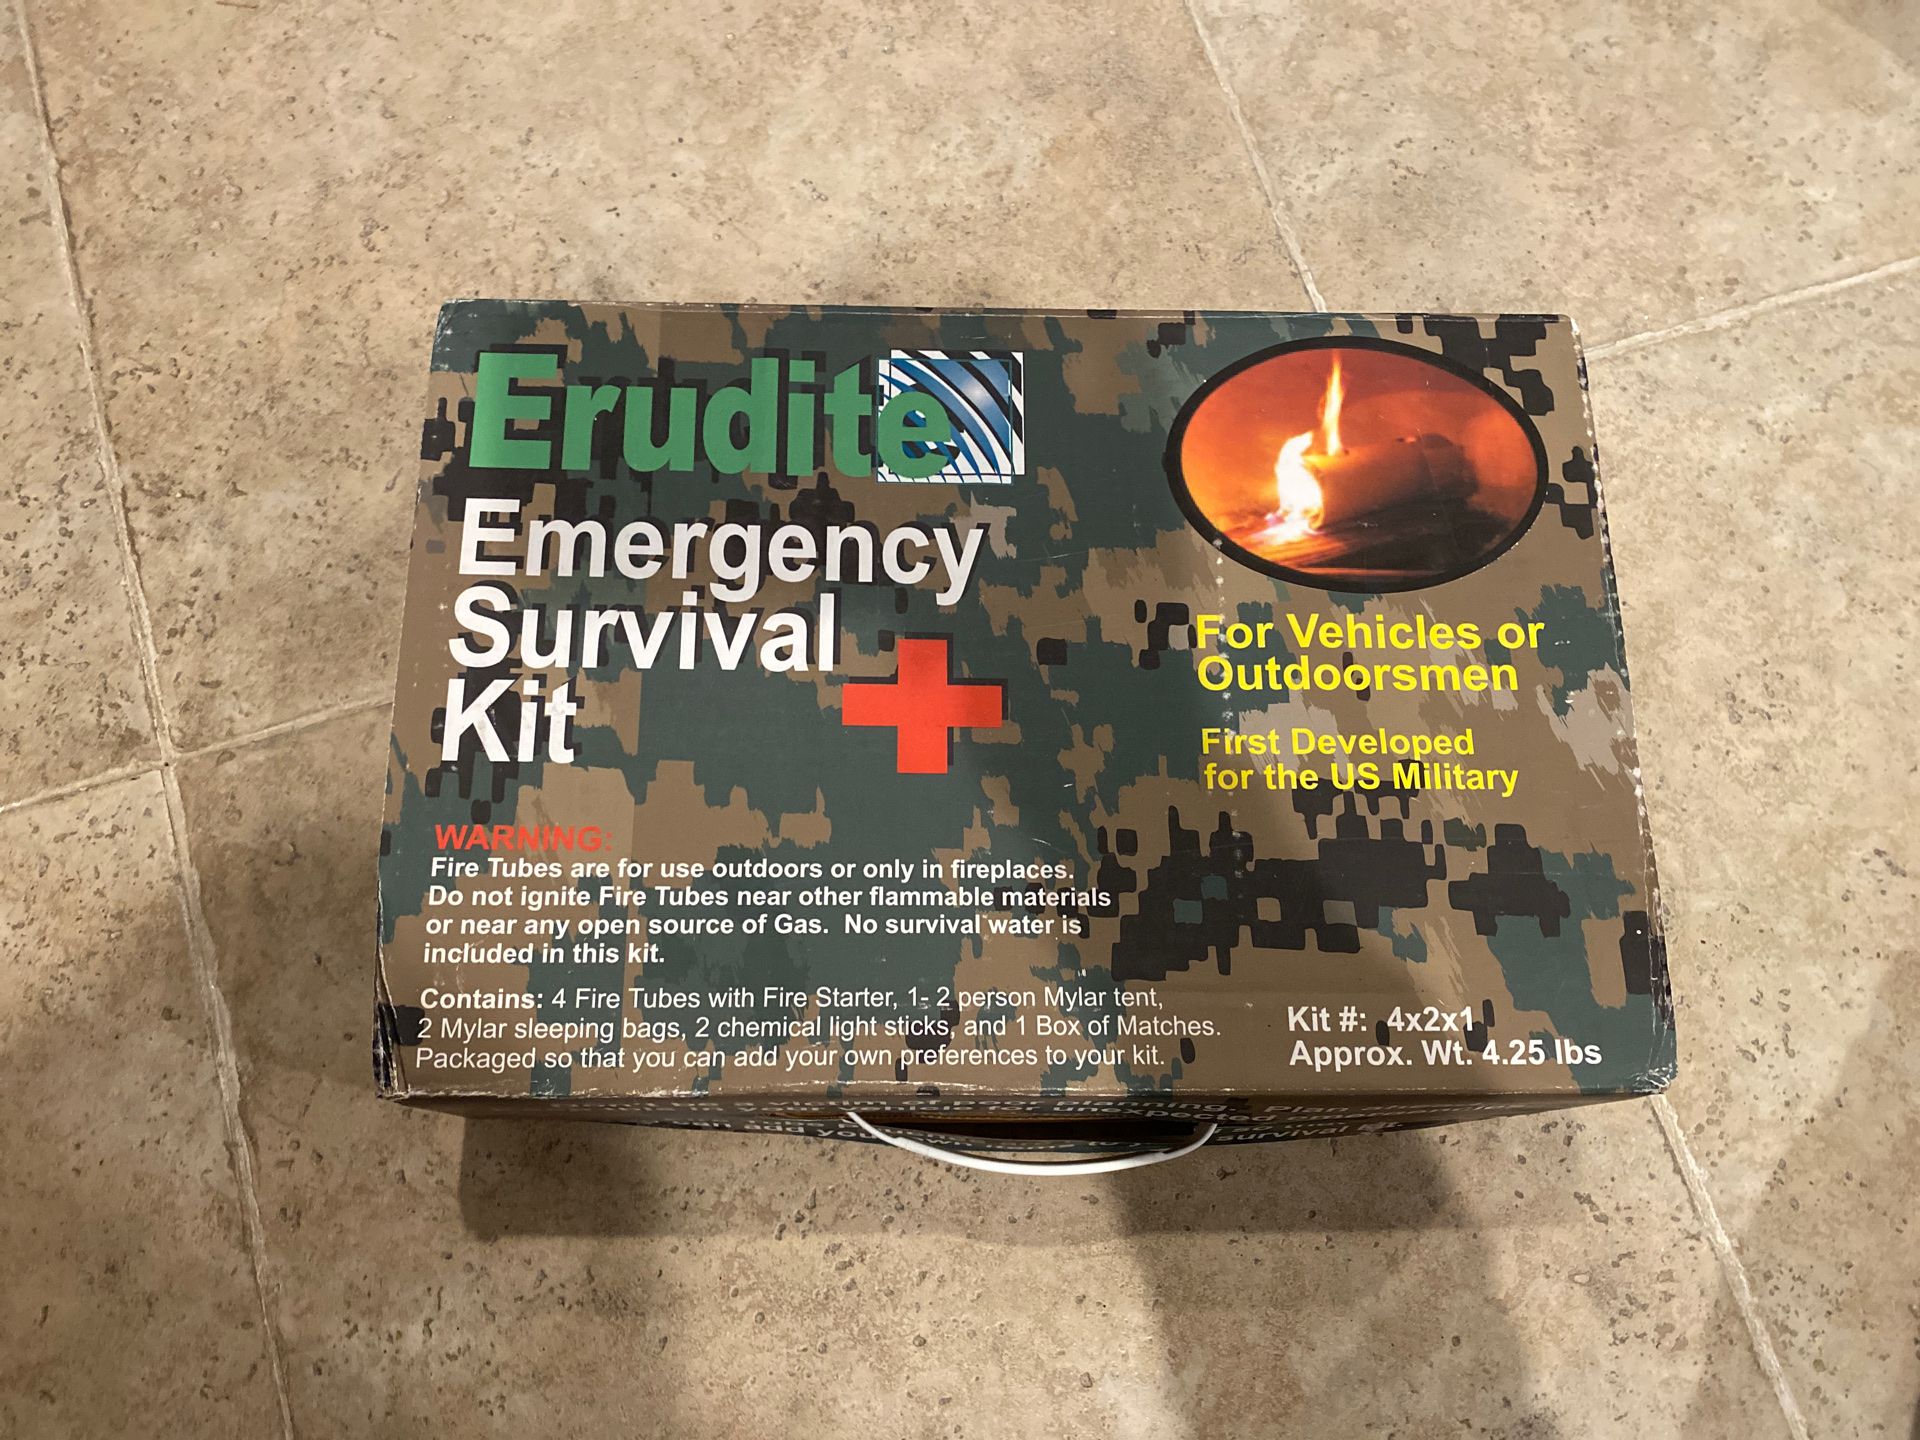 Erudite, Emergency Survival Kit